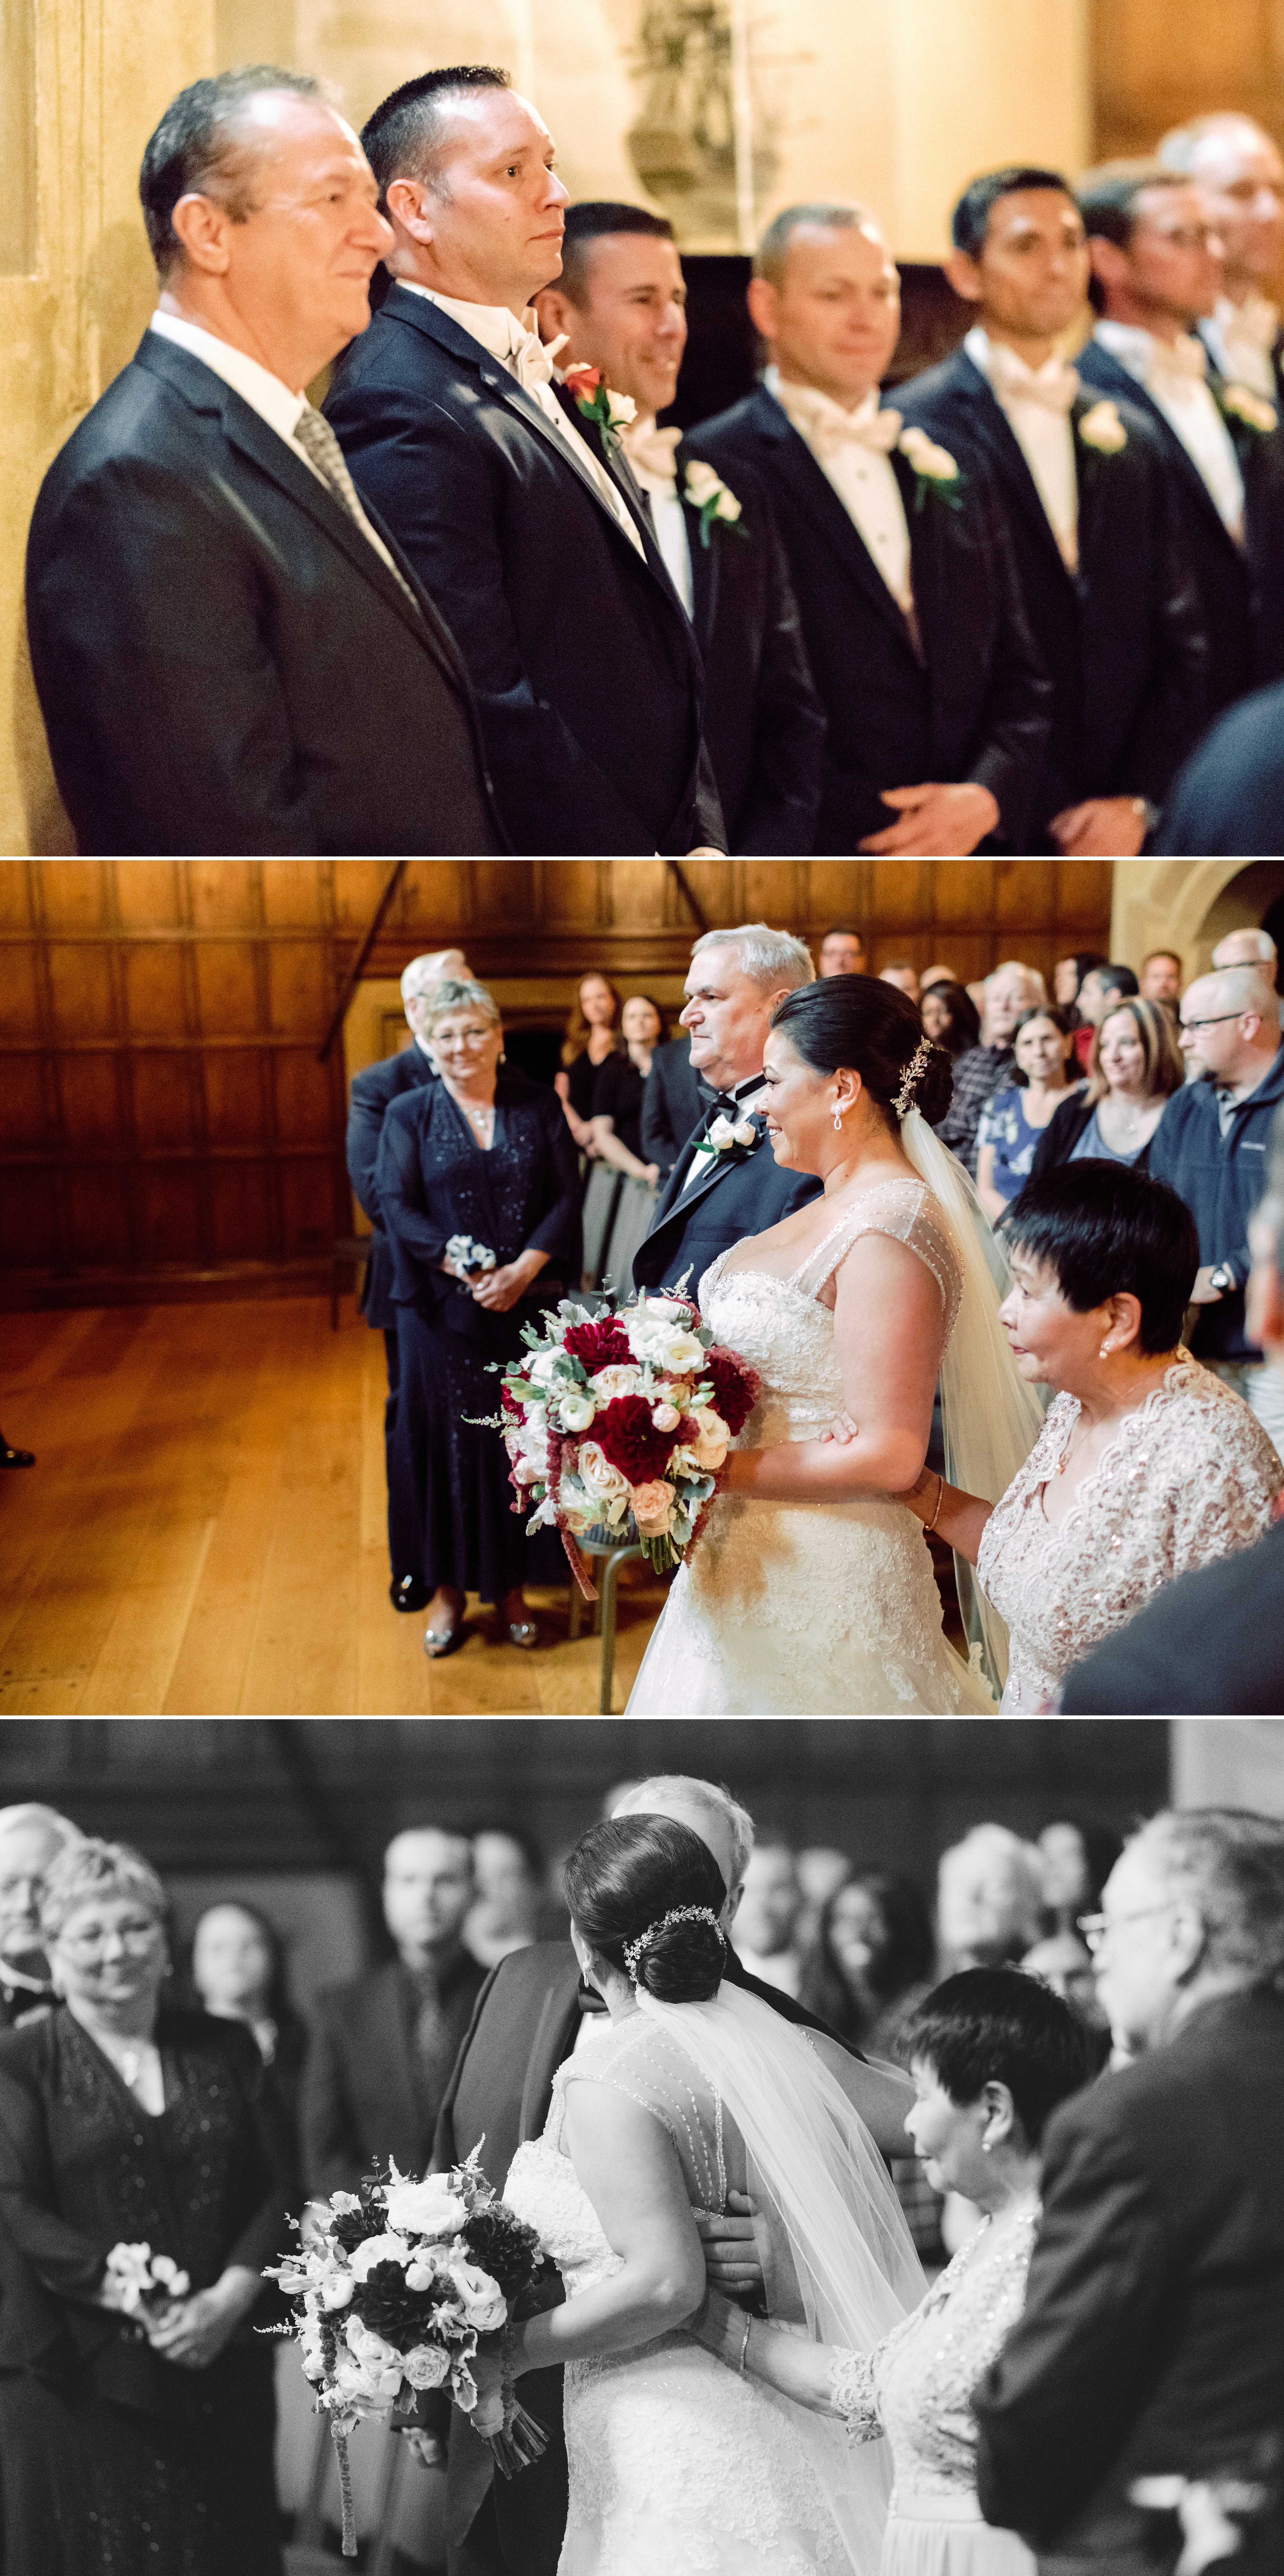 Ceremony photos of bride and groom at Meadow Brook Hall Wedding